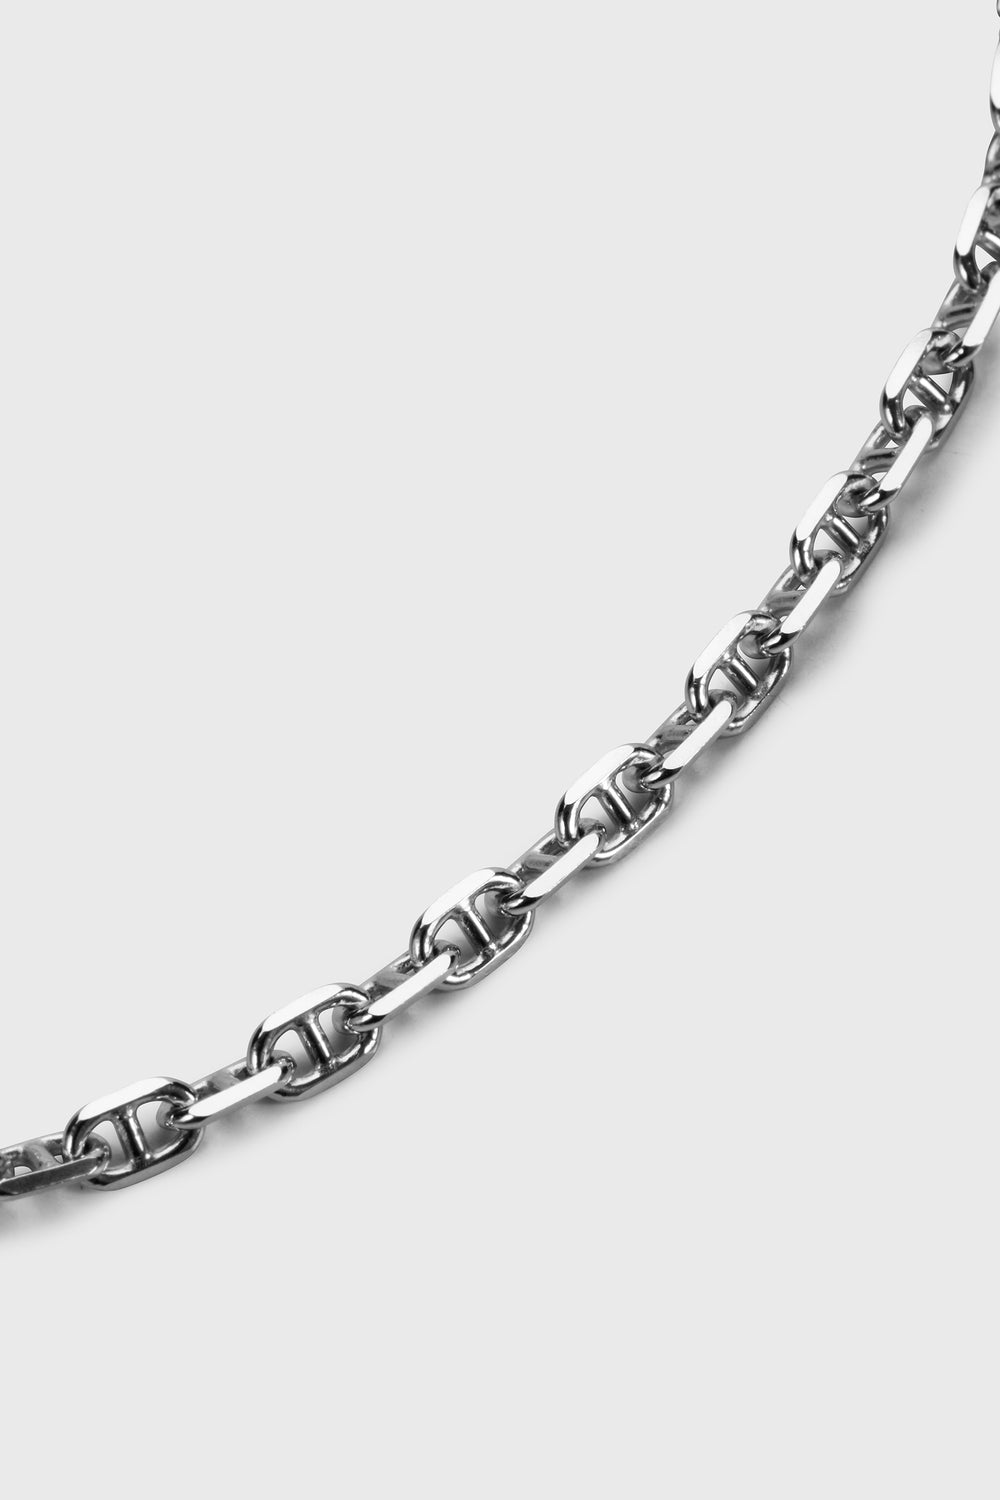 şener besim chunky anchor chain necklace